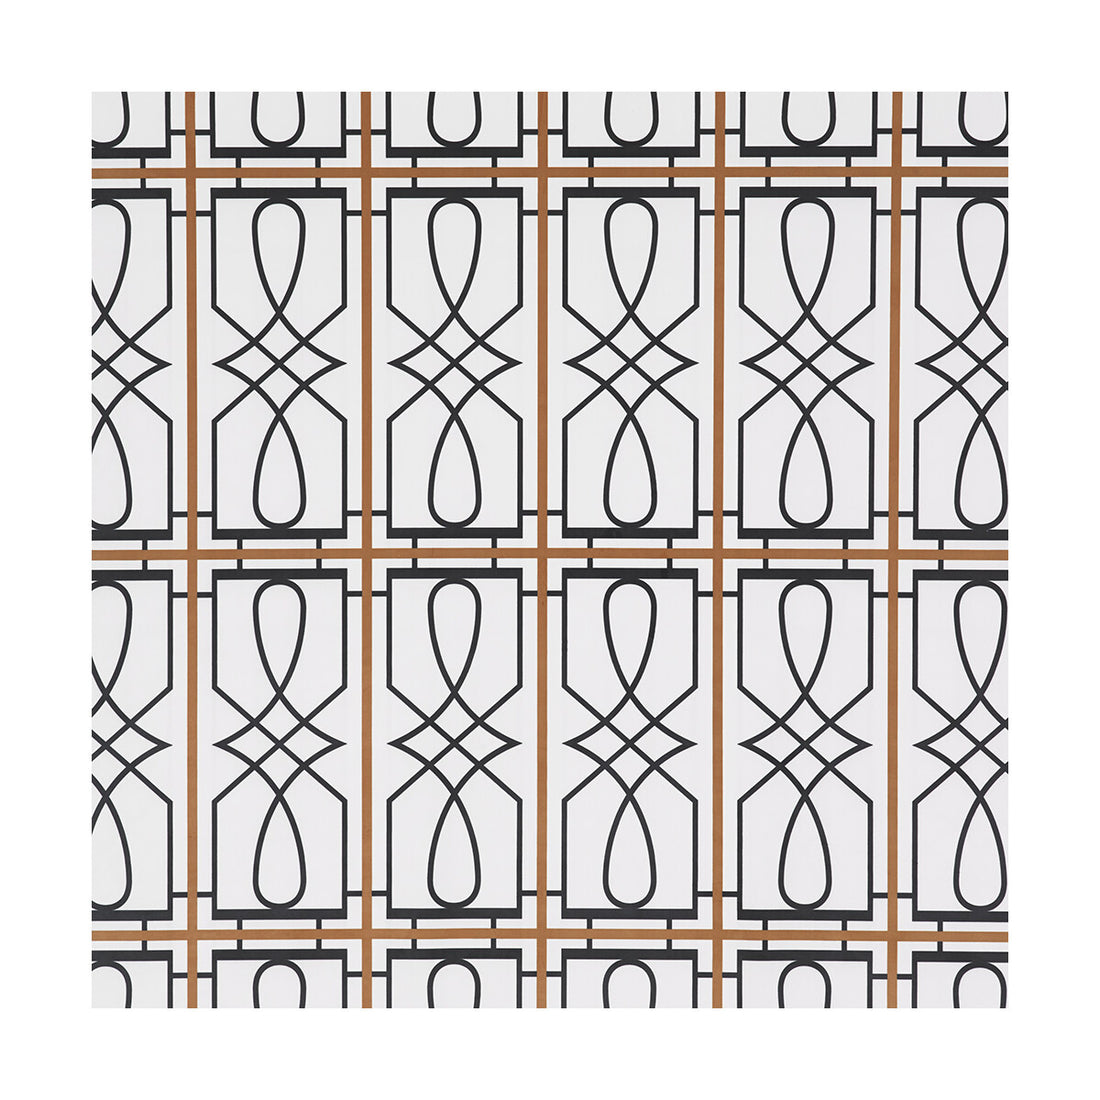 Sopena fabric in oro color - pattern LCT5363.001.0 - by Gaston y Daniela in the Lorenzo Castillo III collection